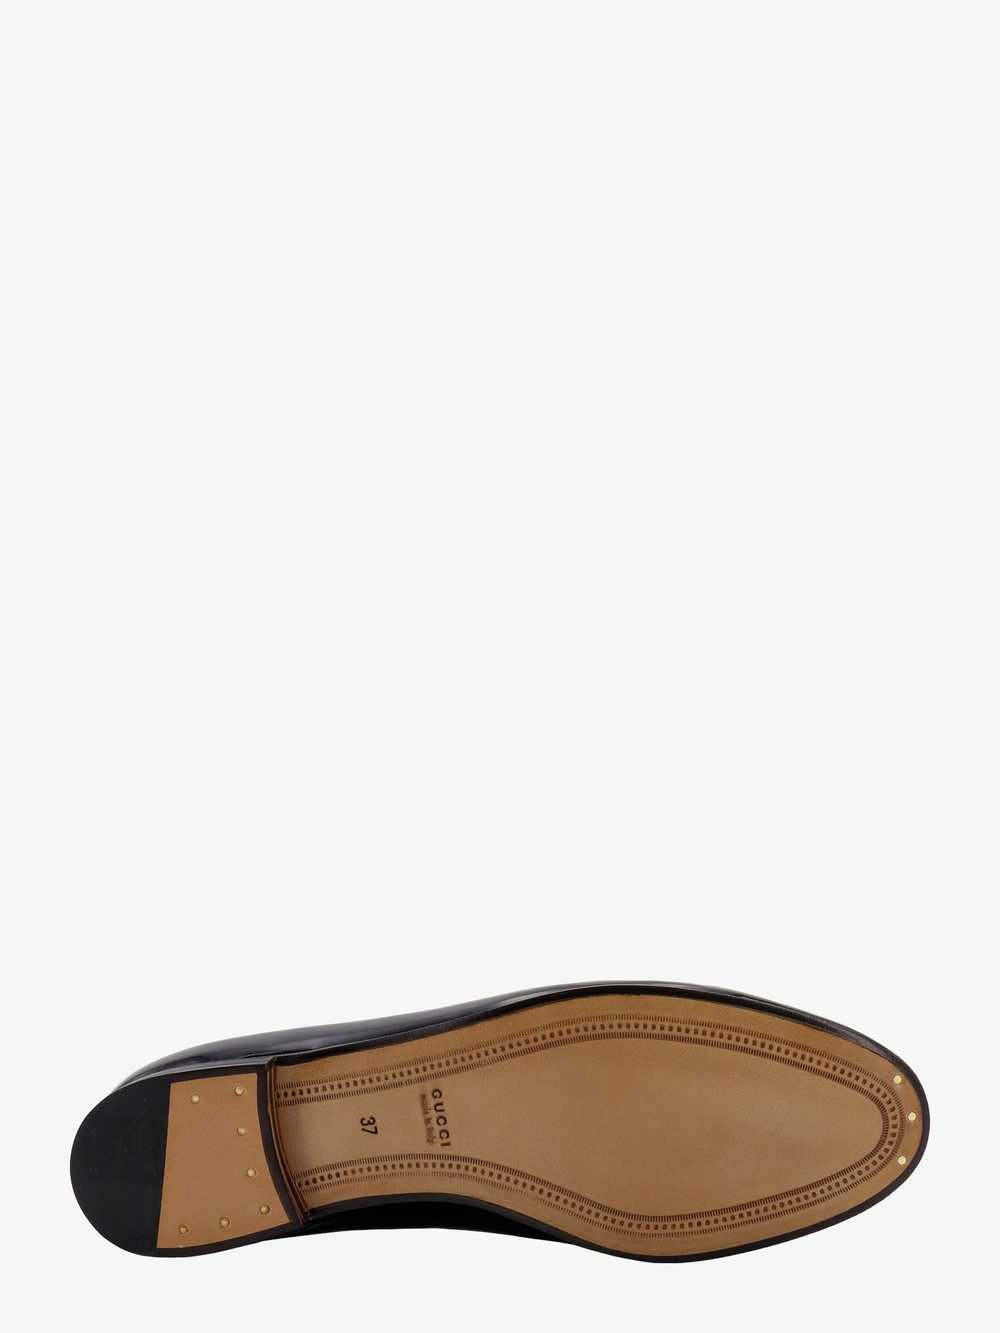 Gucci Jordaan Woman Black Loafers - image 4